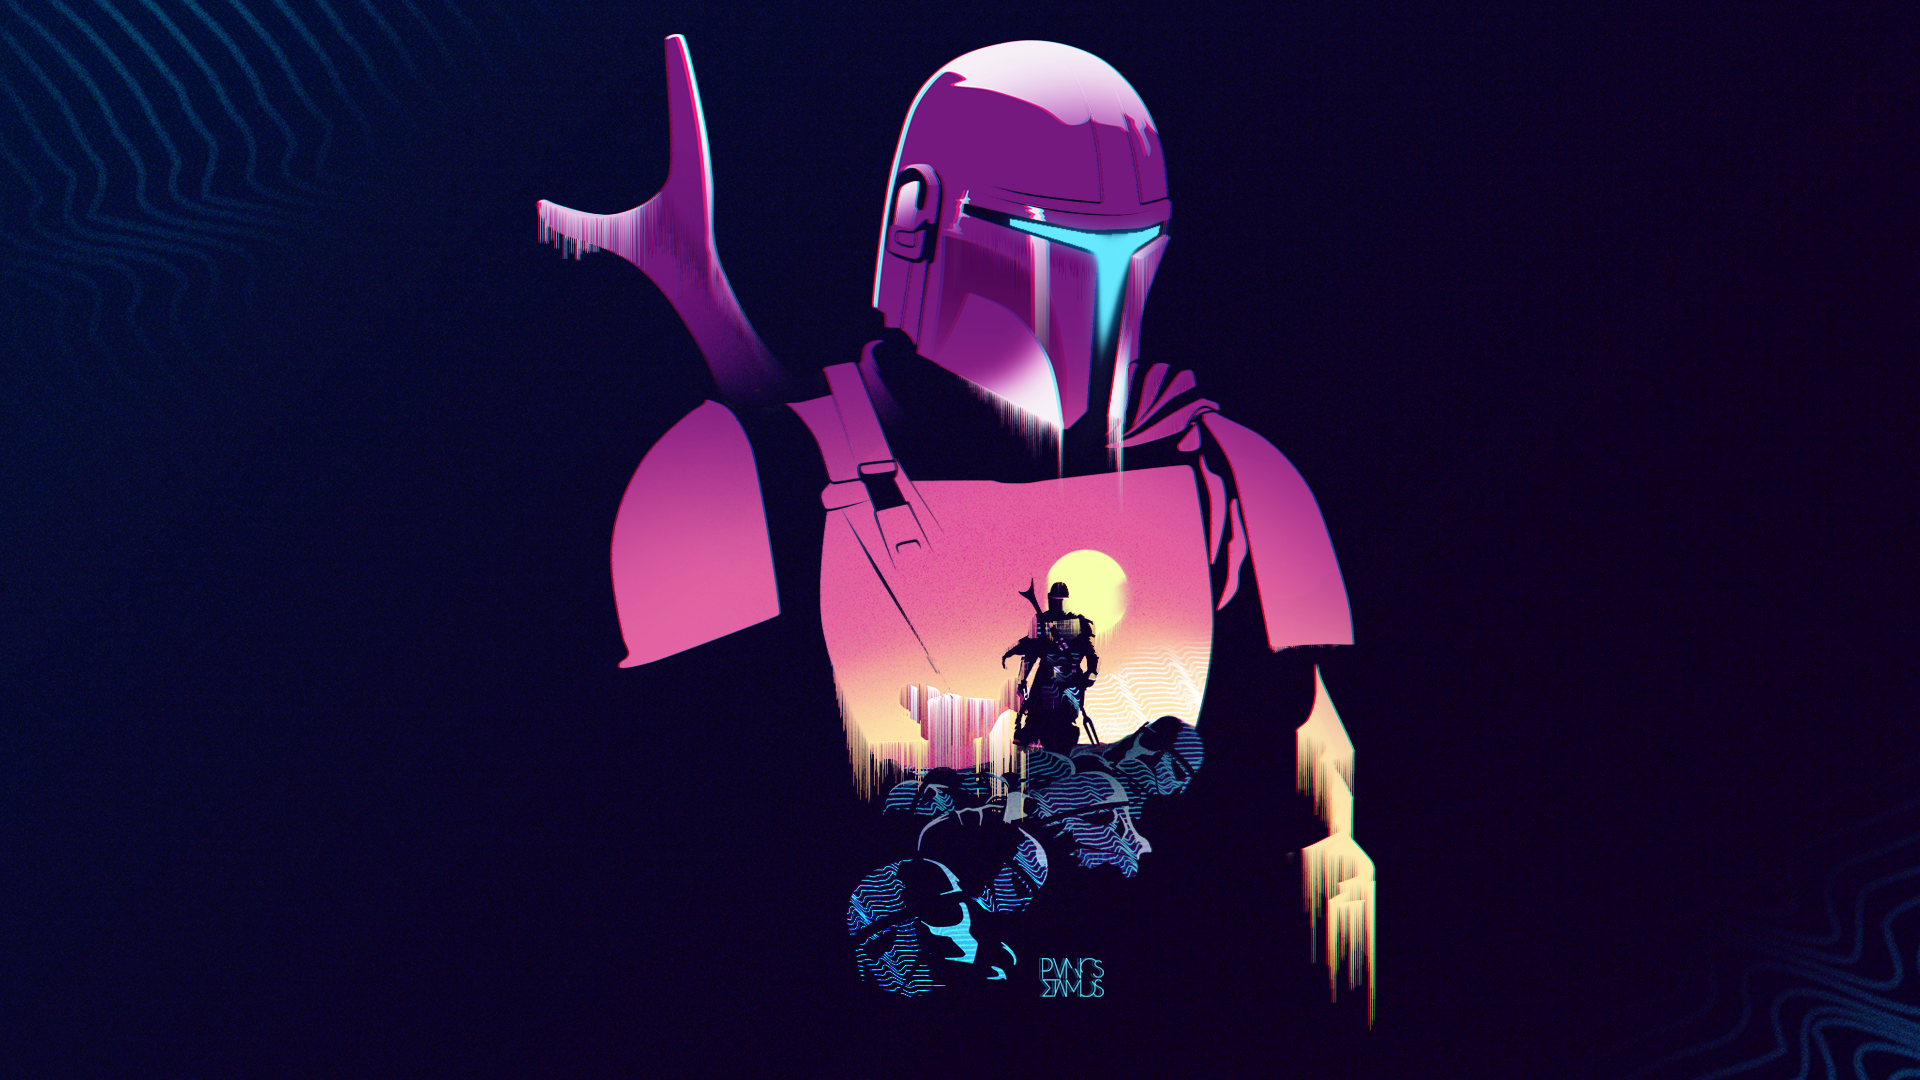 Mandalorians Star Wars Cyberpunk Futuristic Cyber Artwork Punk Baby Yoda Tv Series PanosStamo Pink S 1920x1080